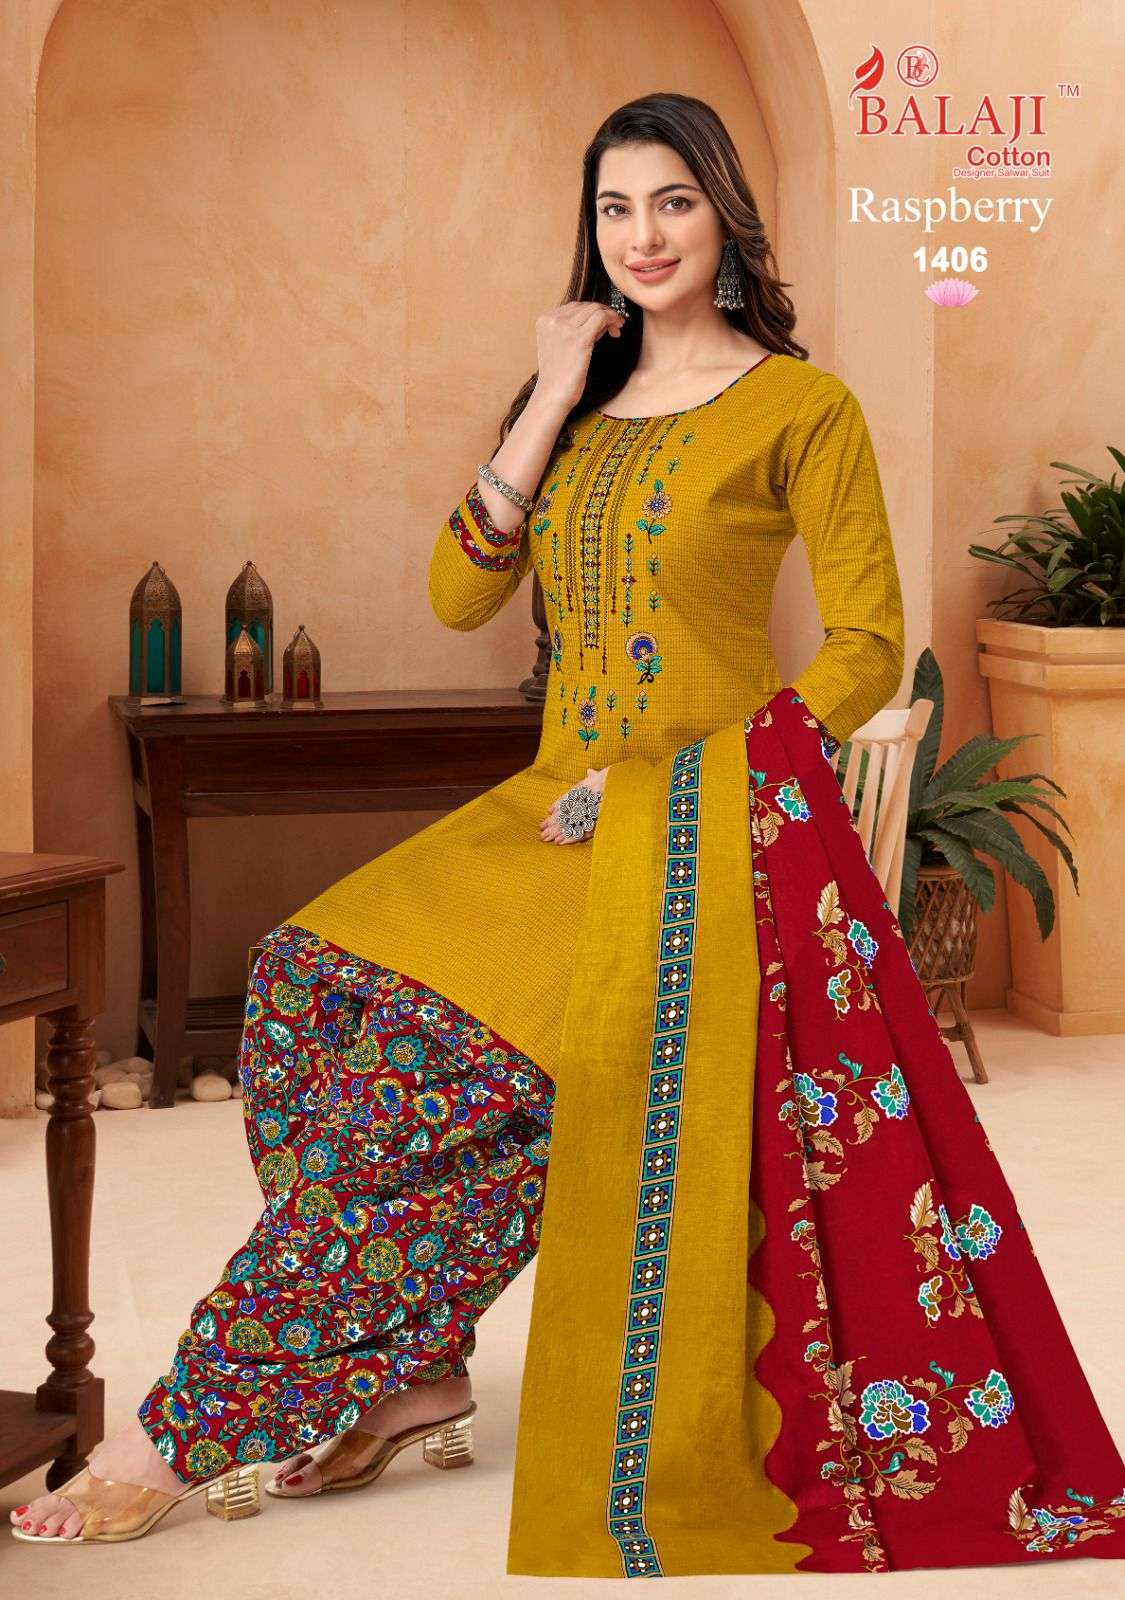 balaji cotton raspberry vol-14 1401-1412 series latest designer cotton salwar kameez wholesaler surat gujarat